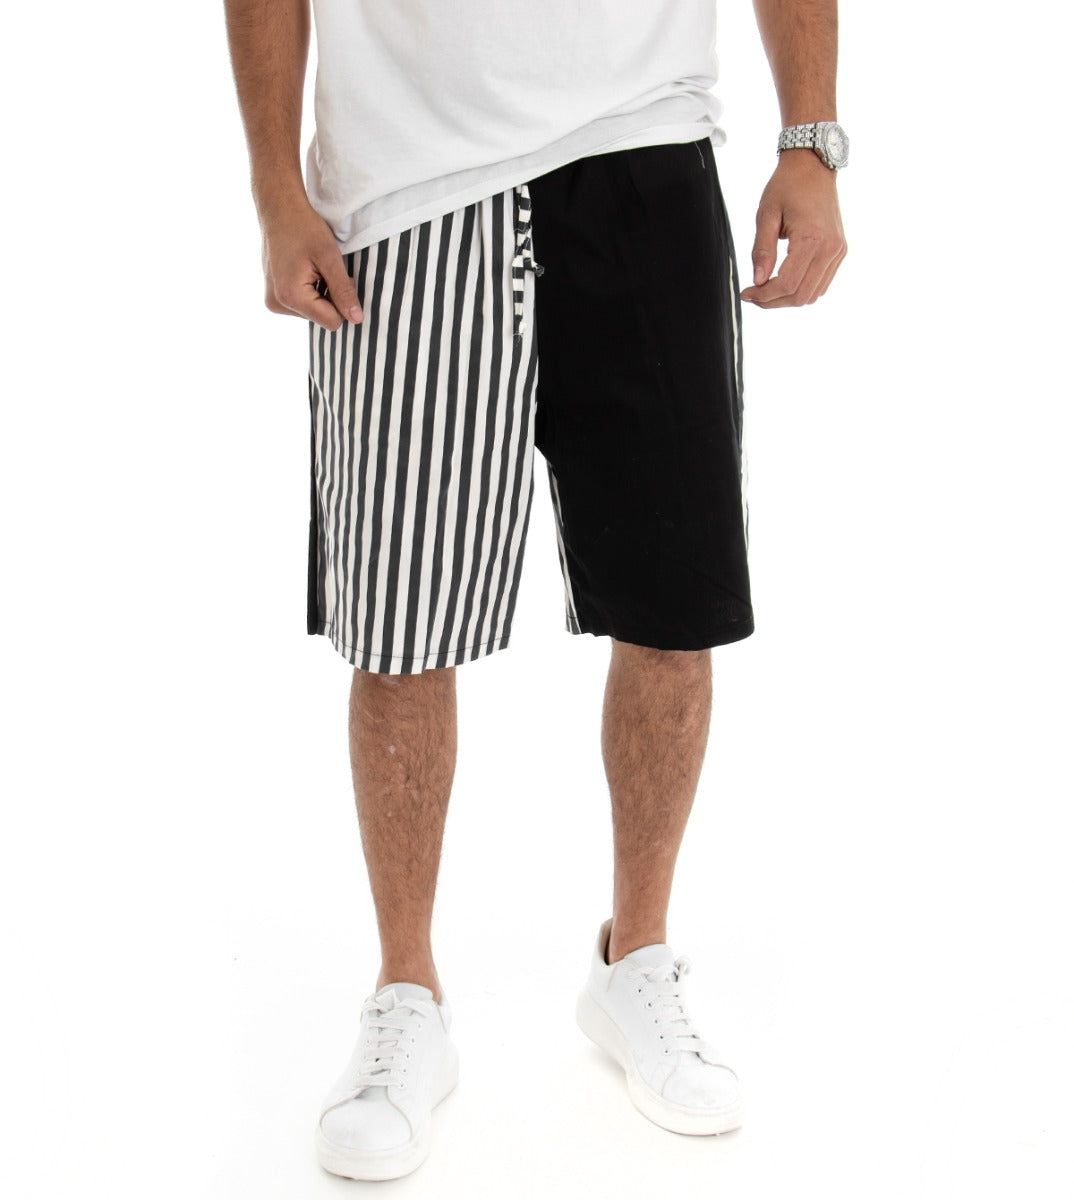 Short Men's Bermuda Shorts Striped Black Two-Tone Cotton GIOSAL-PC1449A